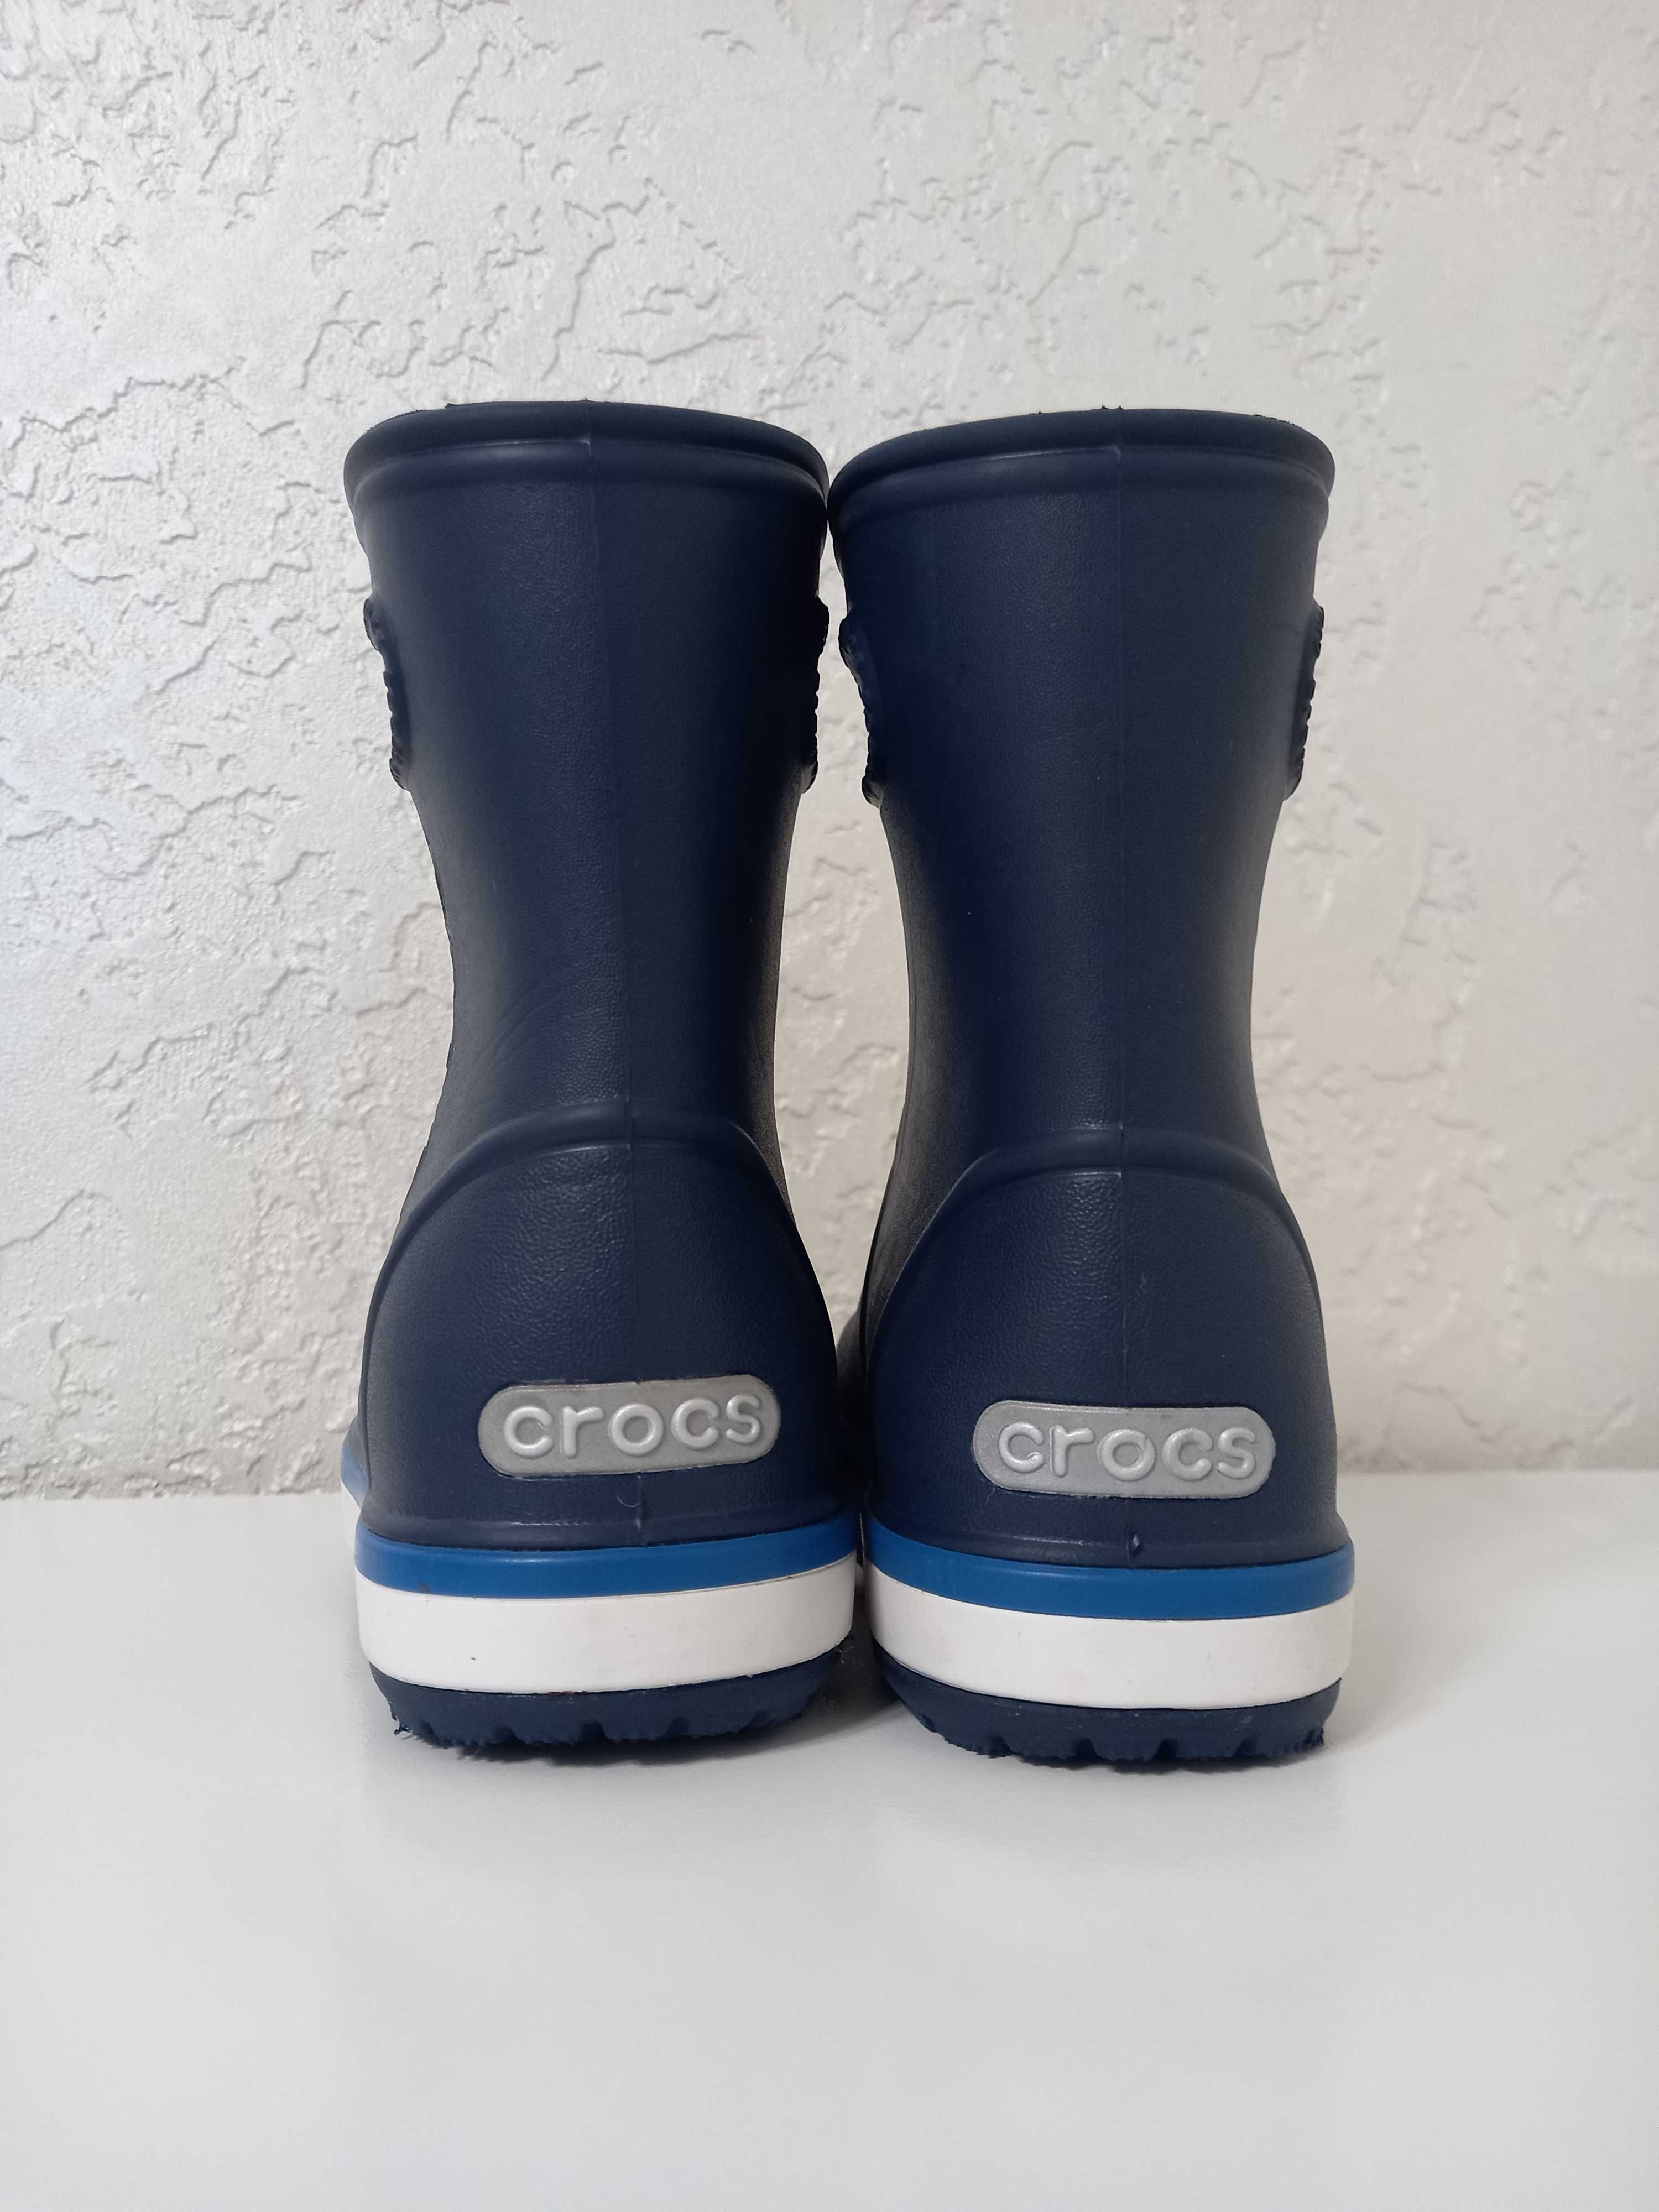 Гумові чоботи (резиновые сапоги) Crocs C7